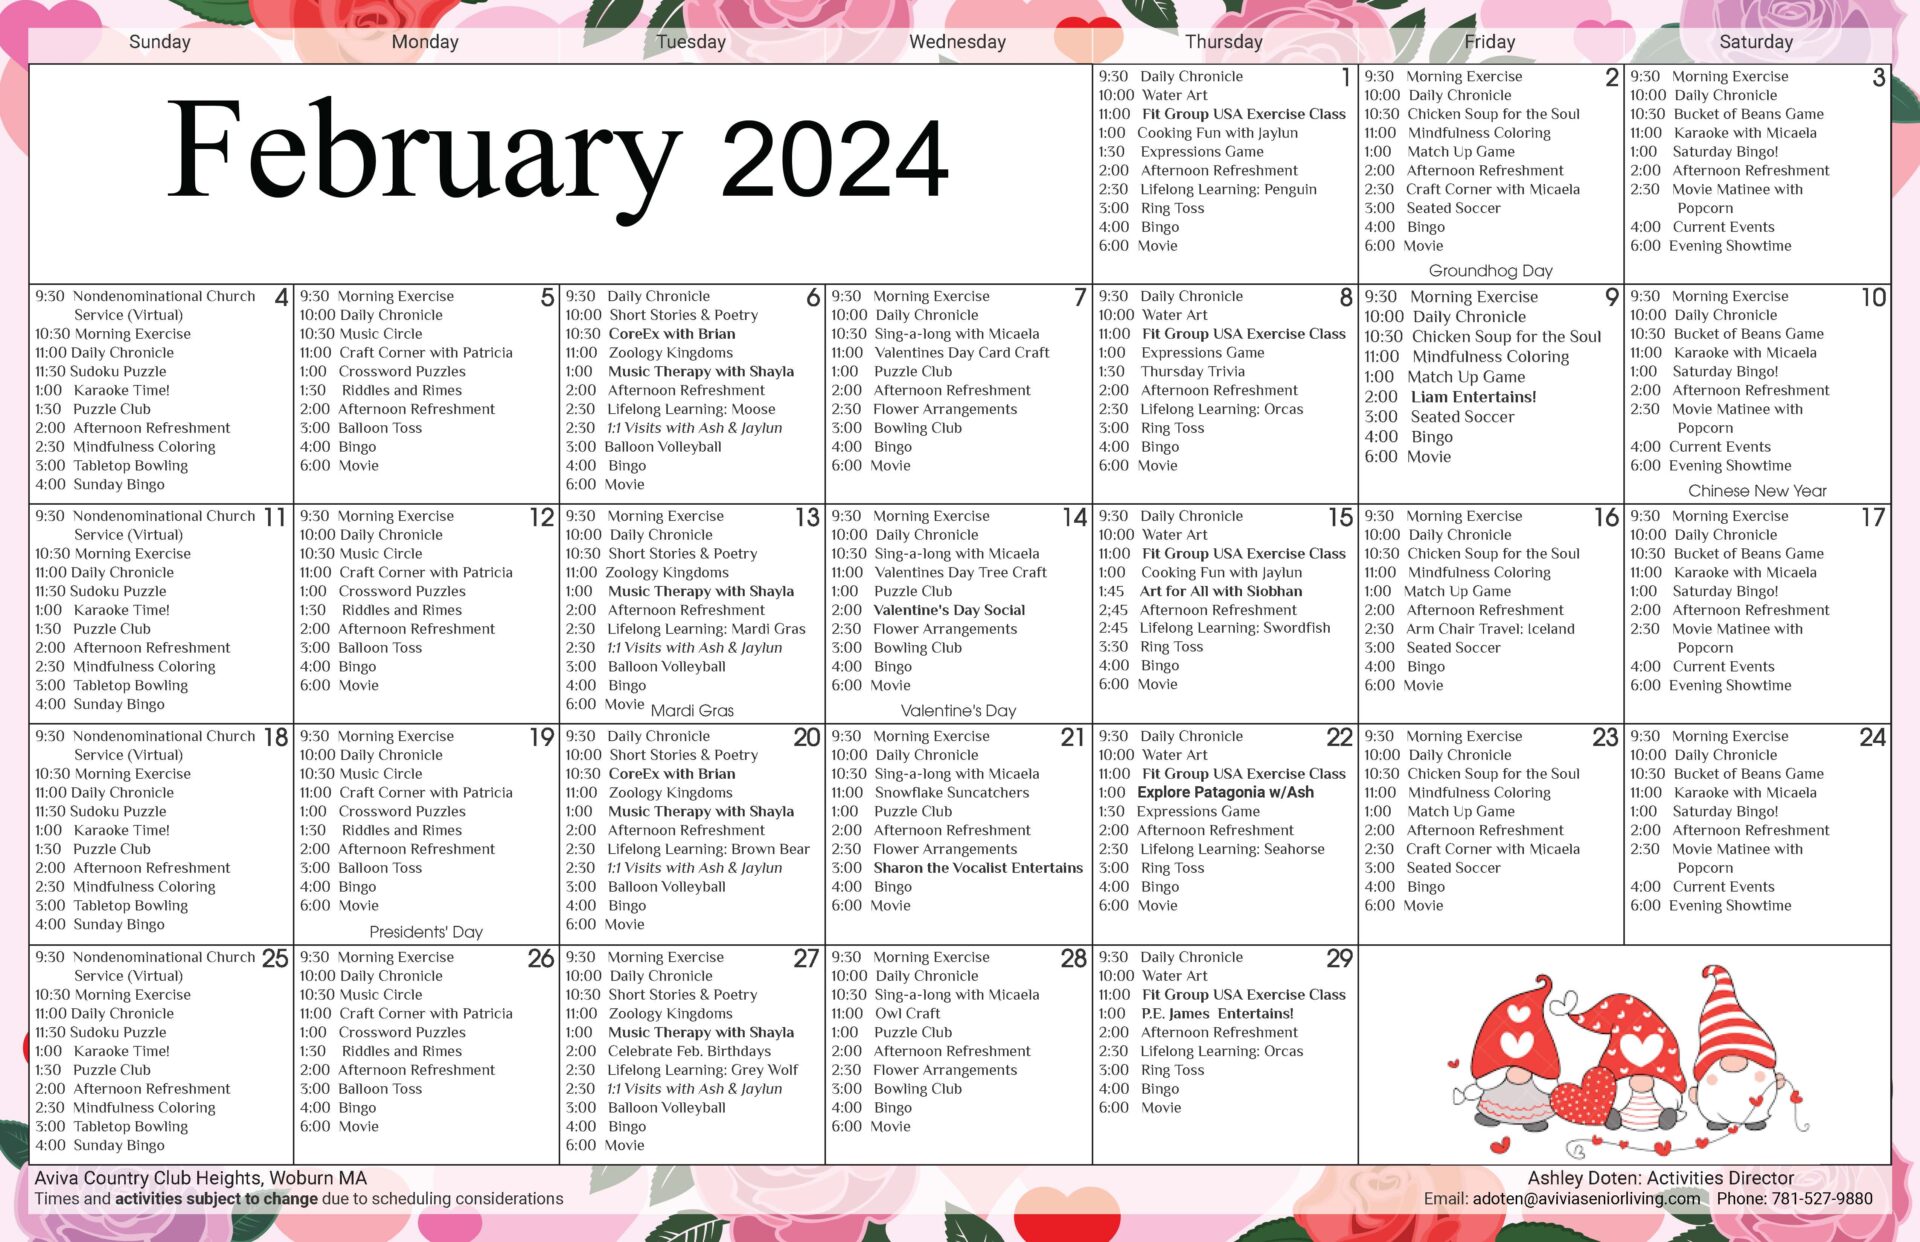 Aviva Country Club Heights Memory Care February 2023 Event Calendar